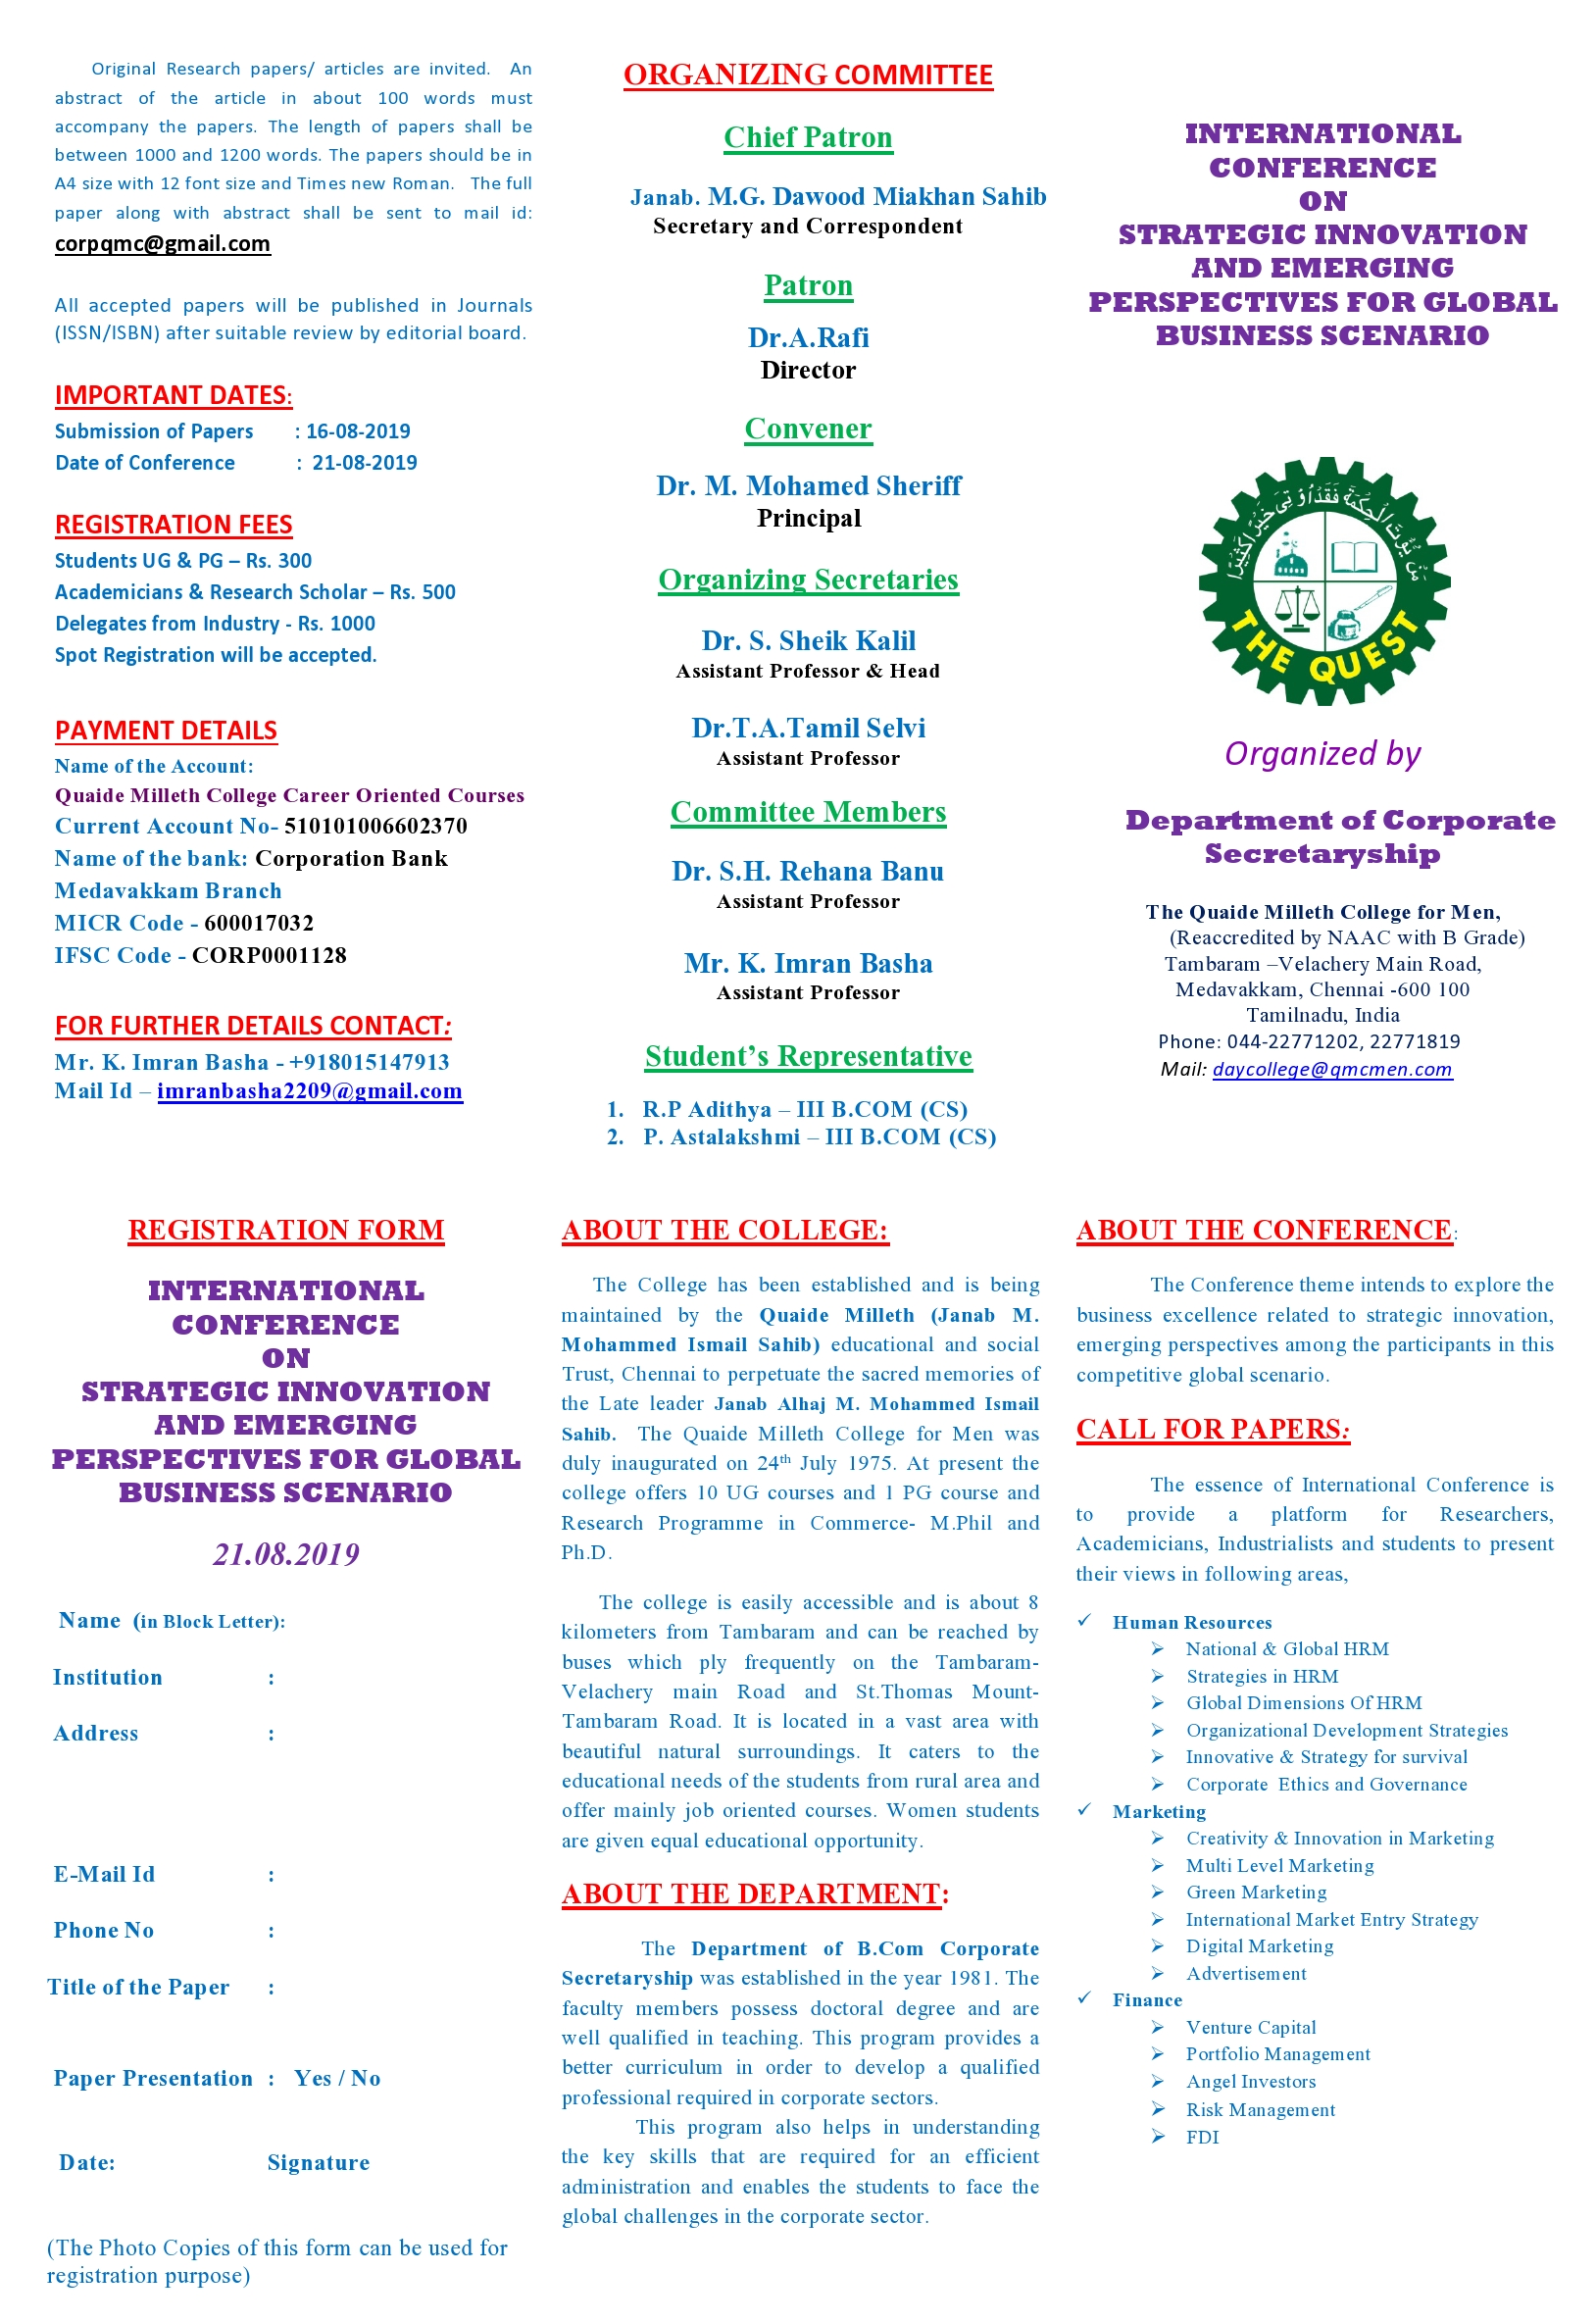 KVIMIS External news - B School, Coimbatore